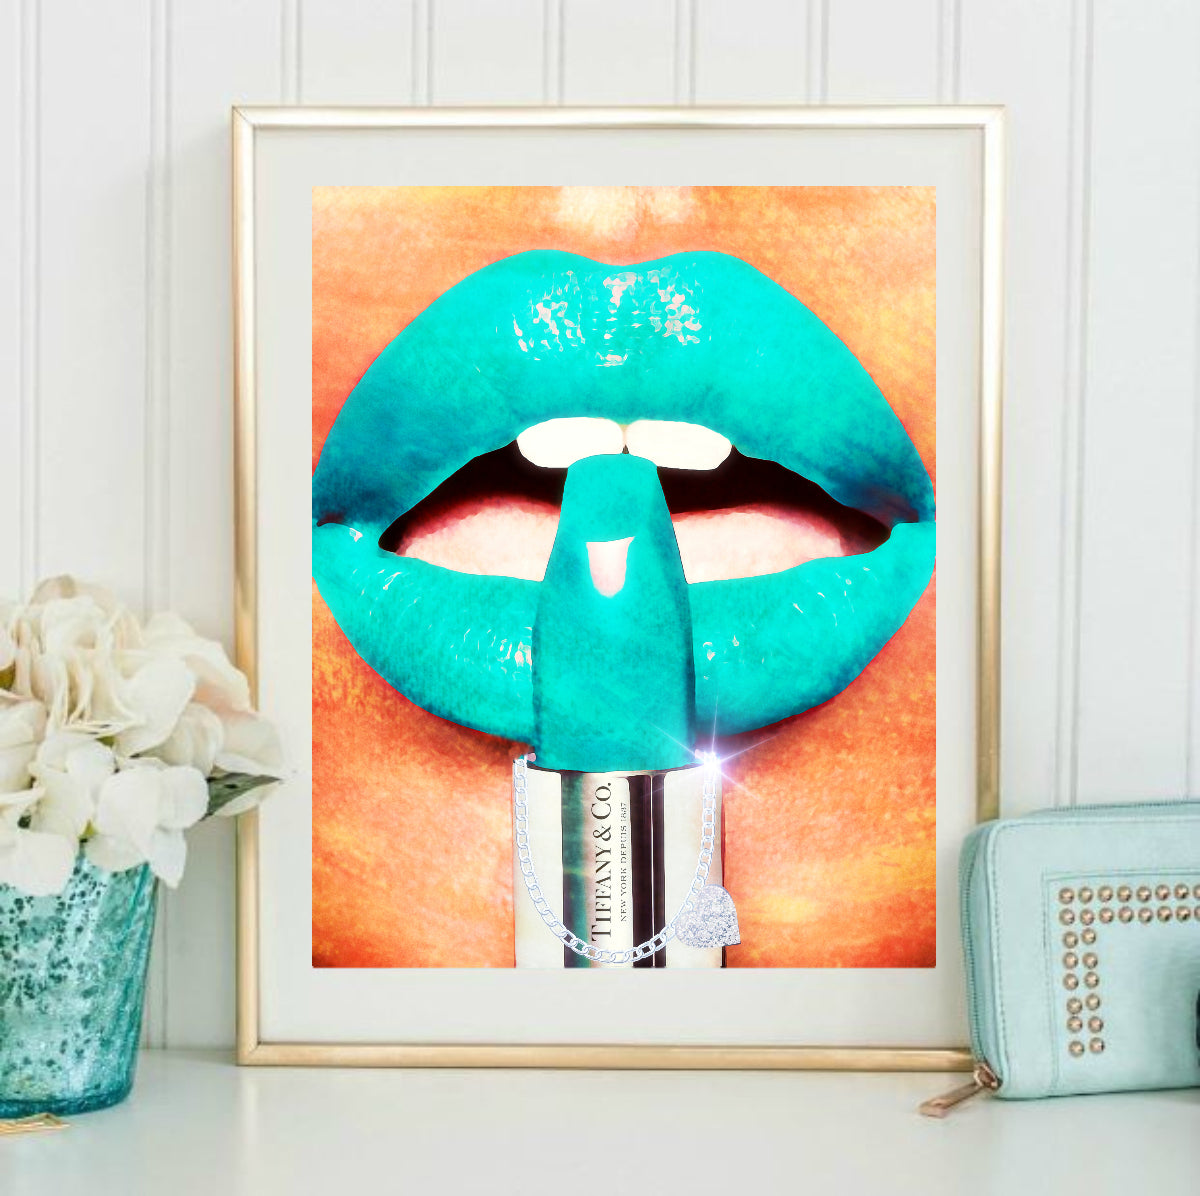 Lipstick glam makeup room wall art print